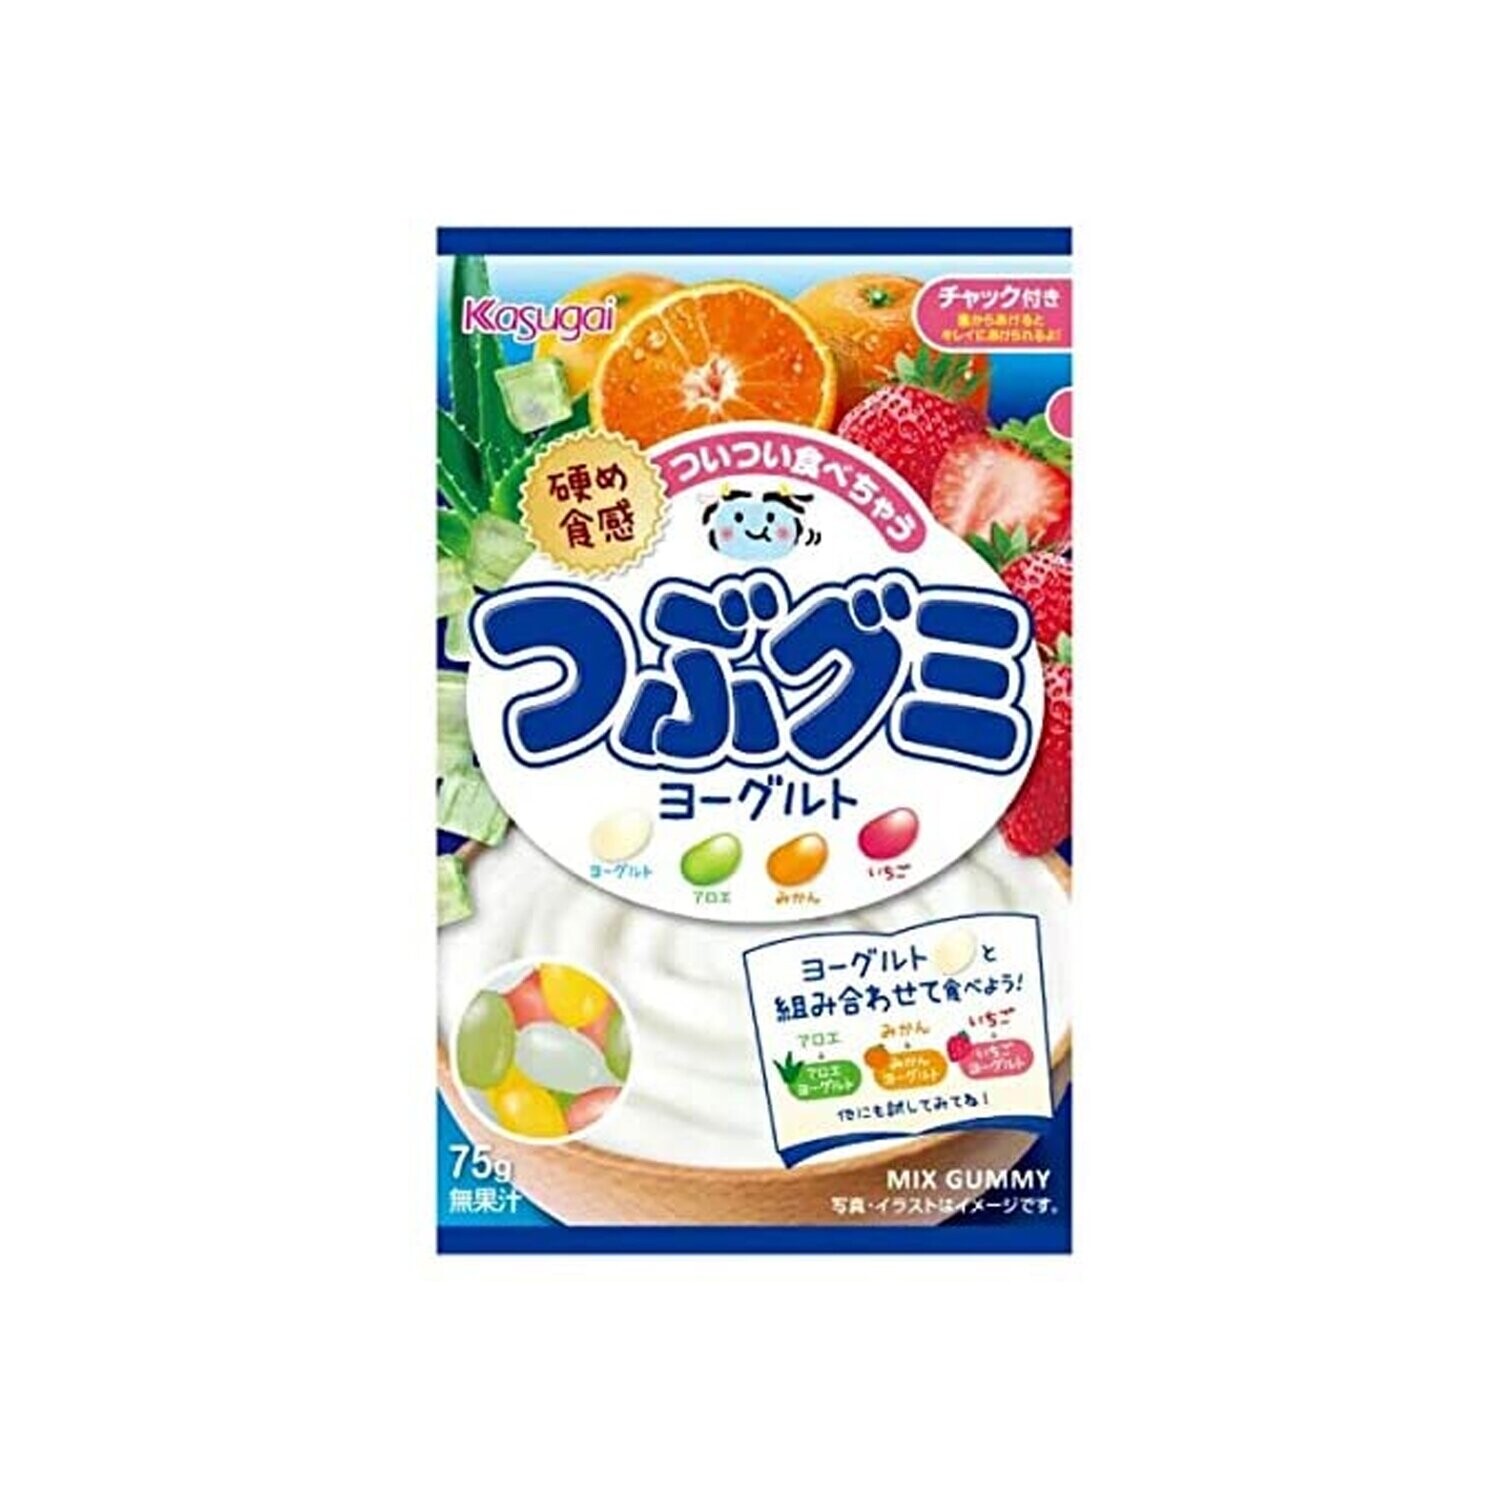 Kasugai Jelly Bean Yogurt (75G)